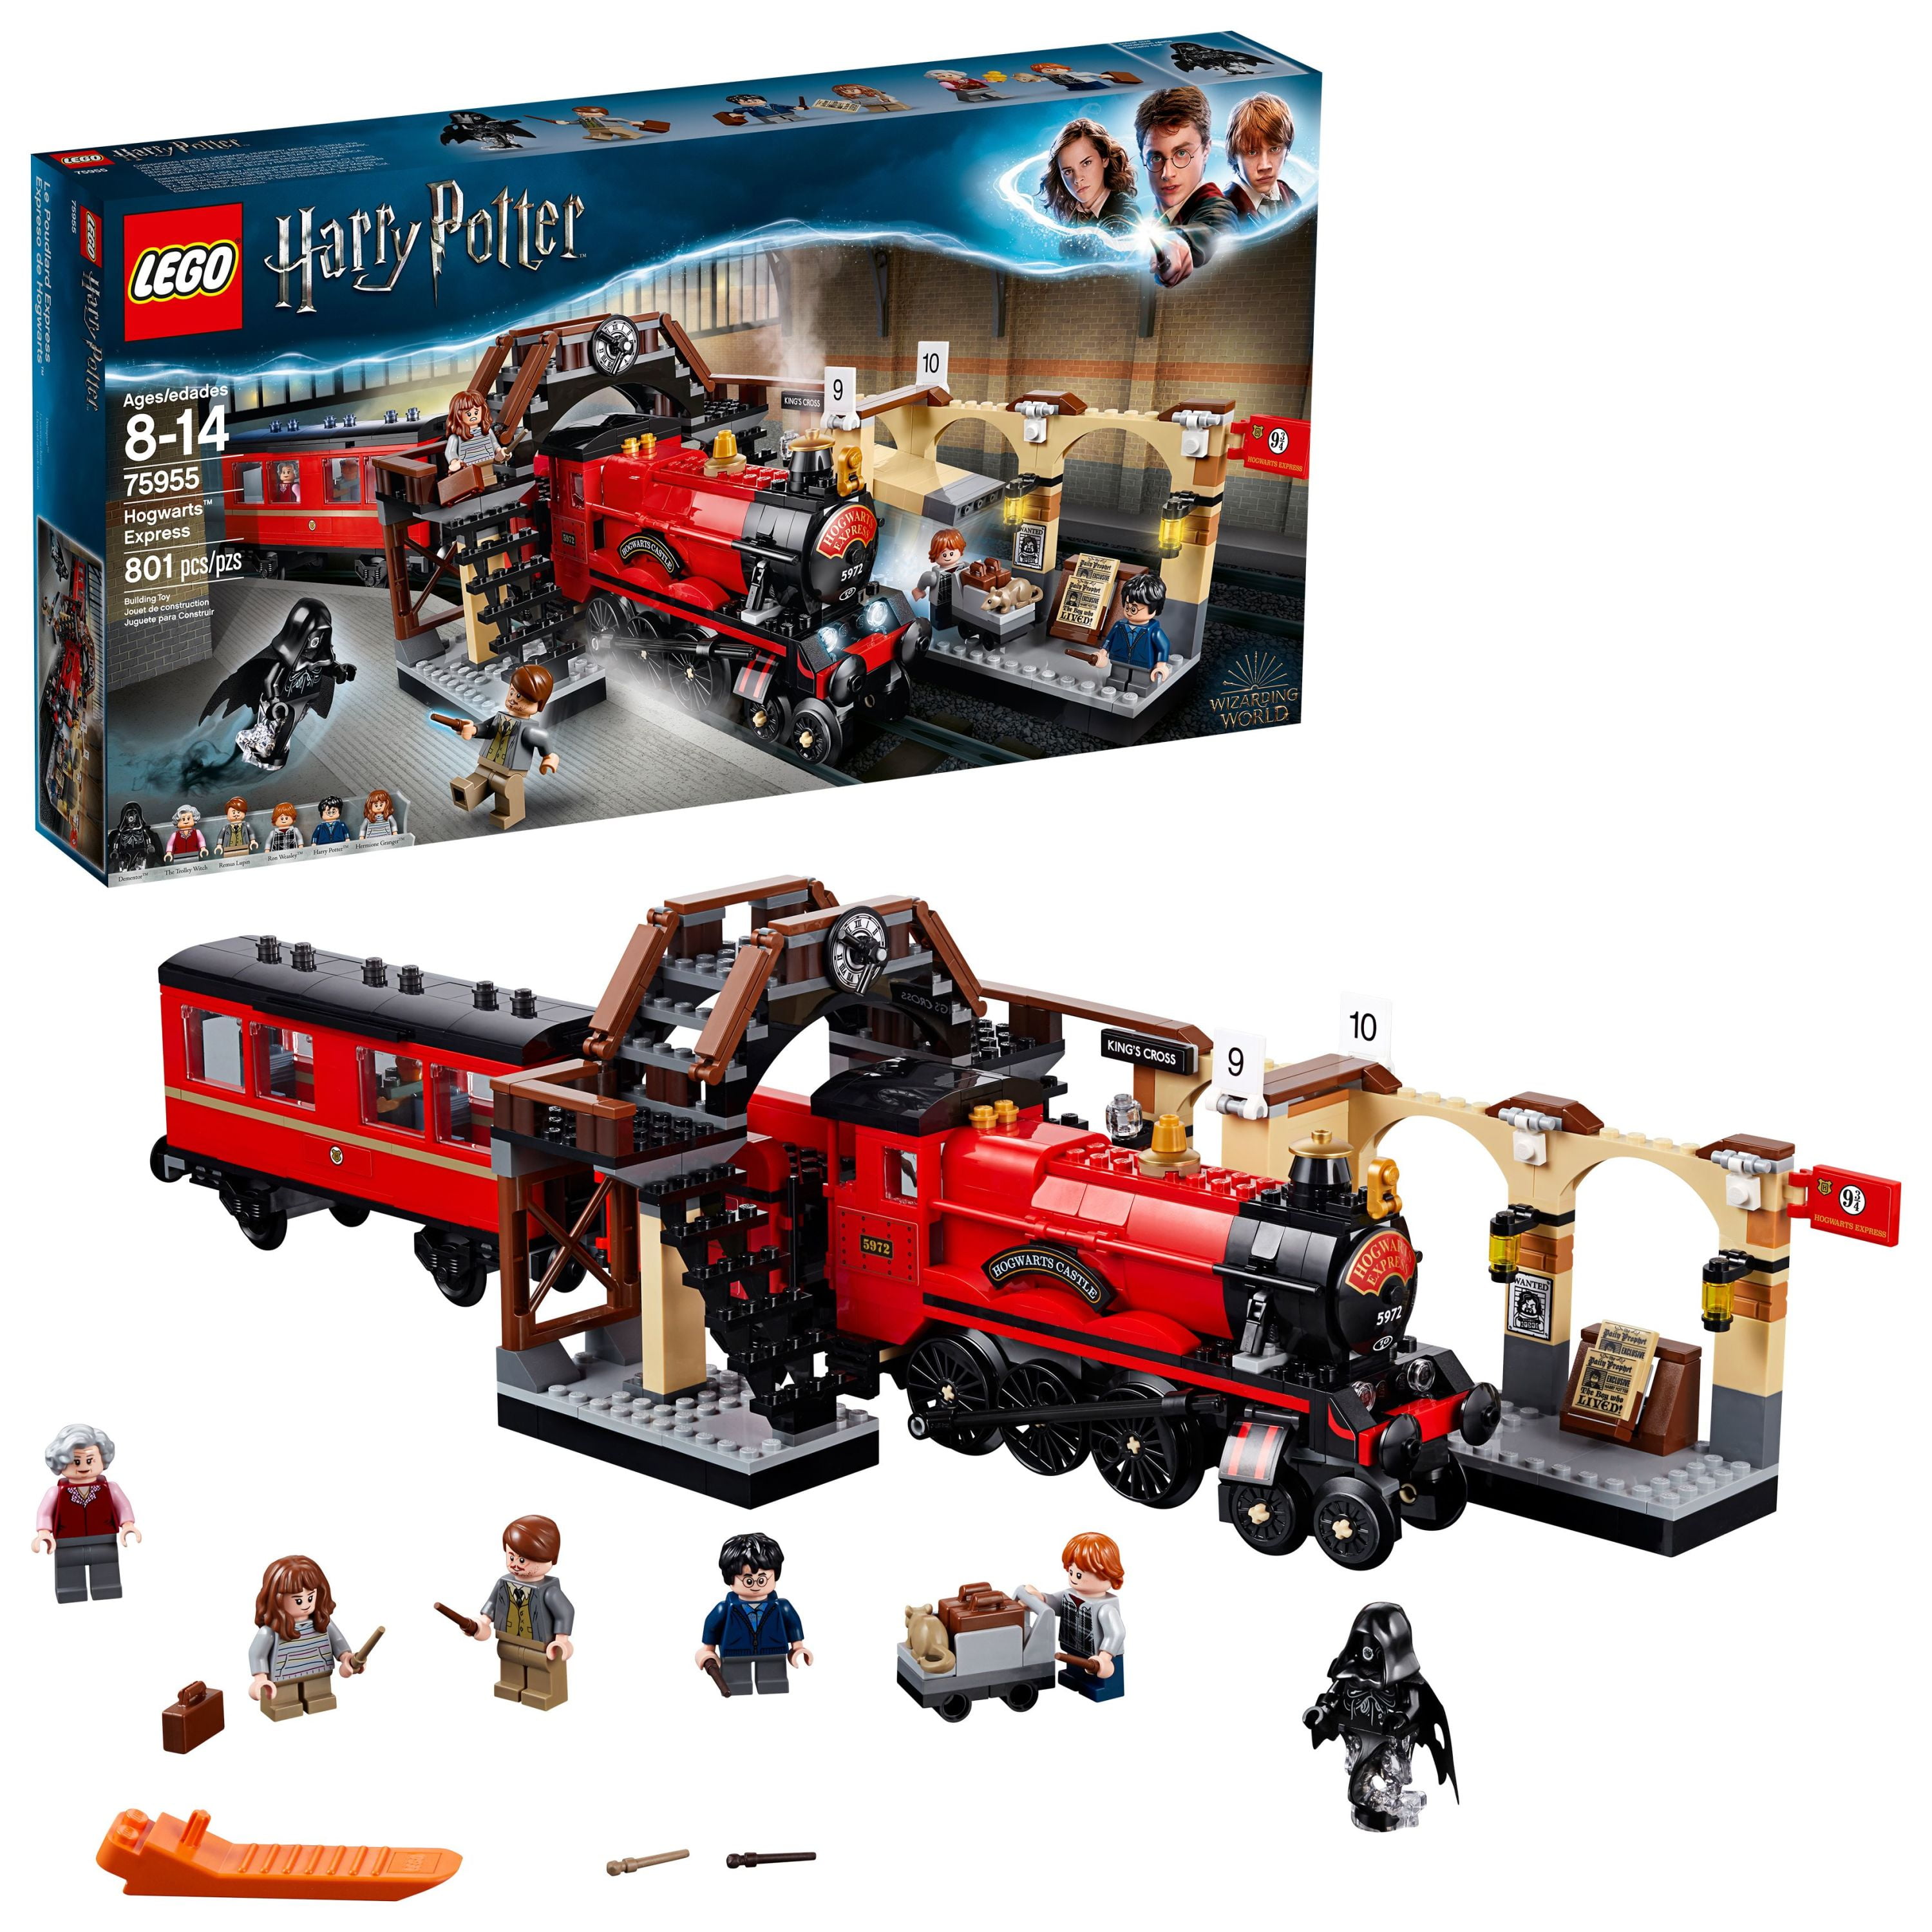 LEGO Harry Potter Hogwarts Express 75955 Toy Train Building Set - Walmart.com